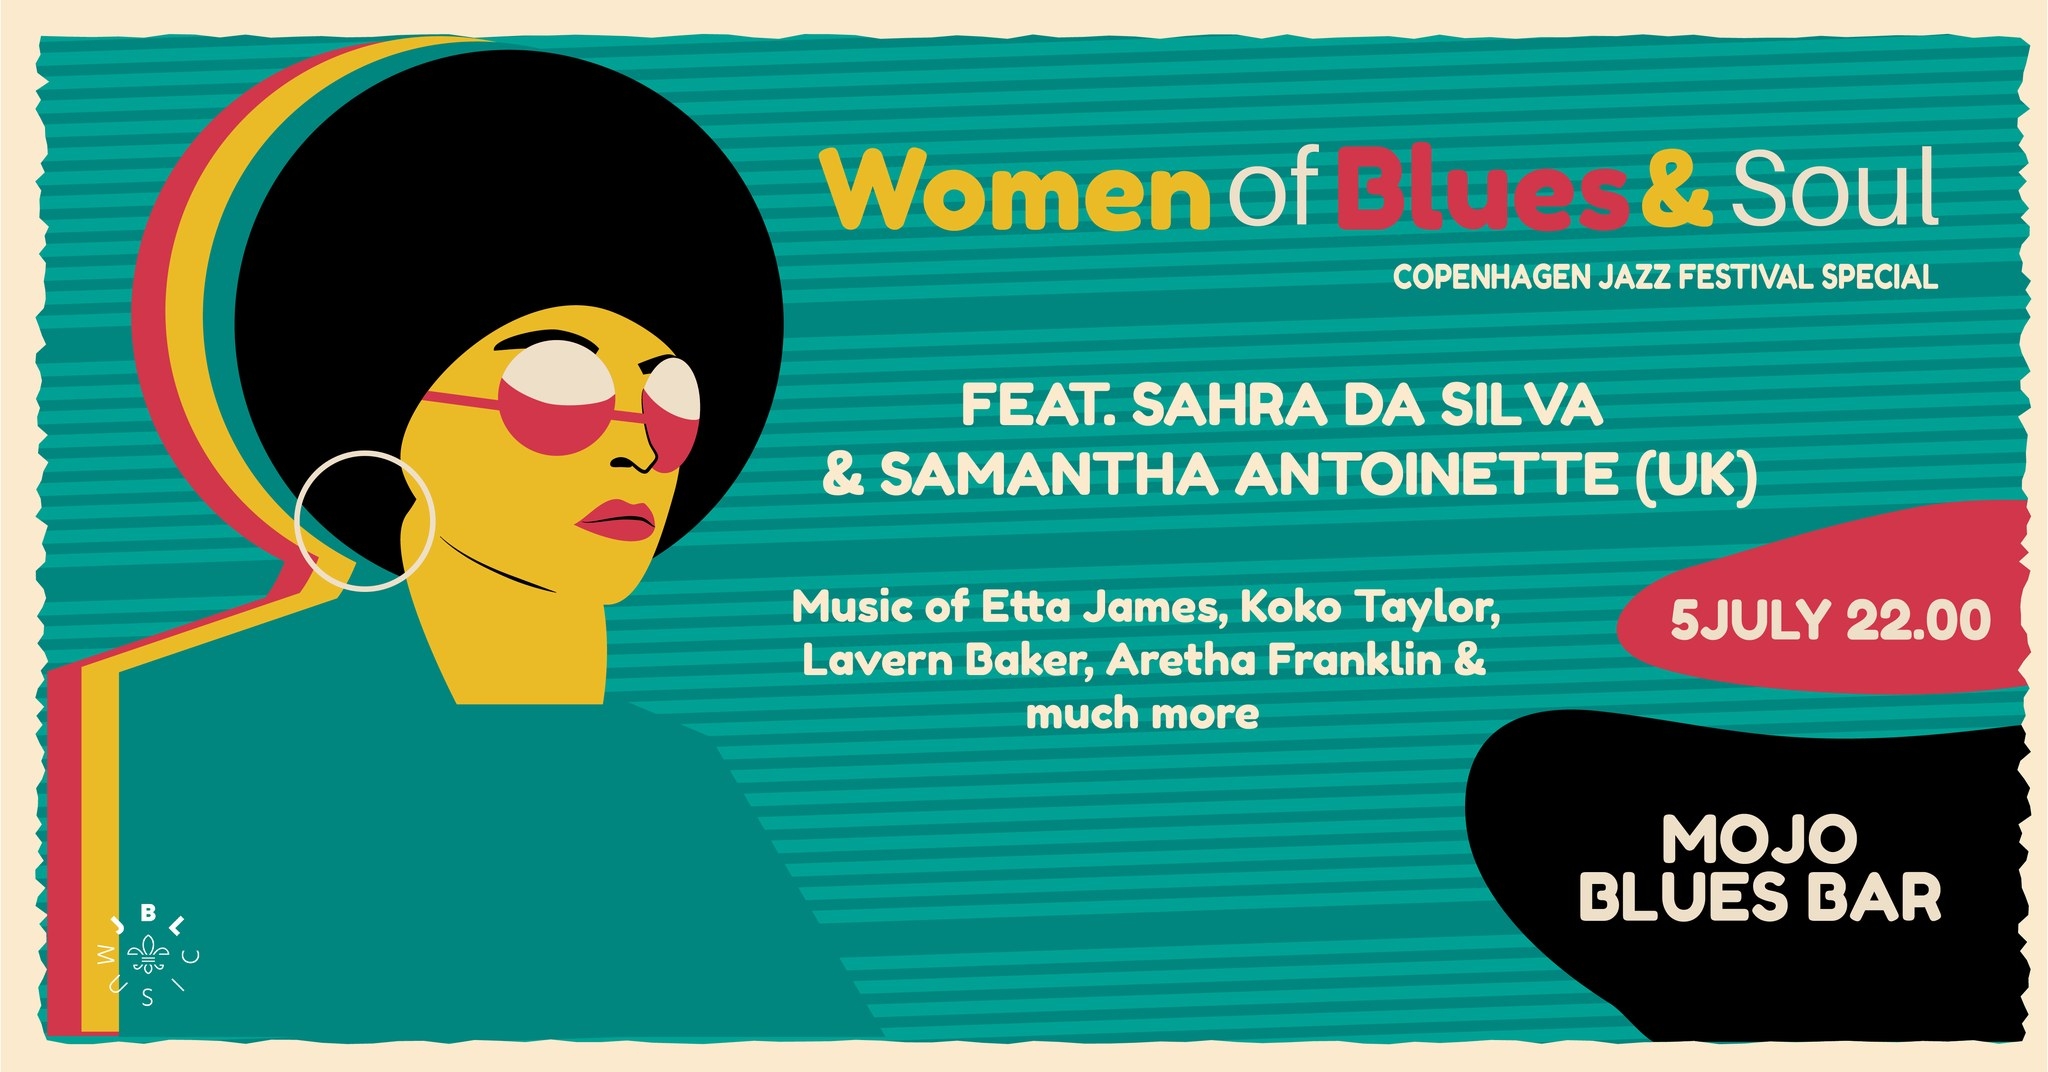 Women Of Blues & Soul feat. Sahra da Silva & Samantha Antoinette (UK/DK)
Jazzfestival